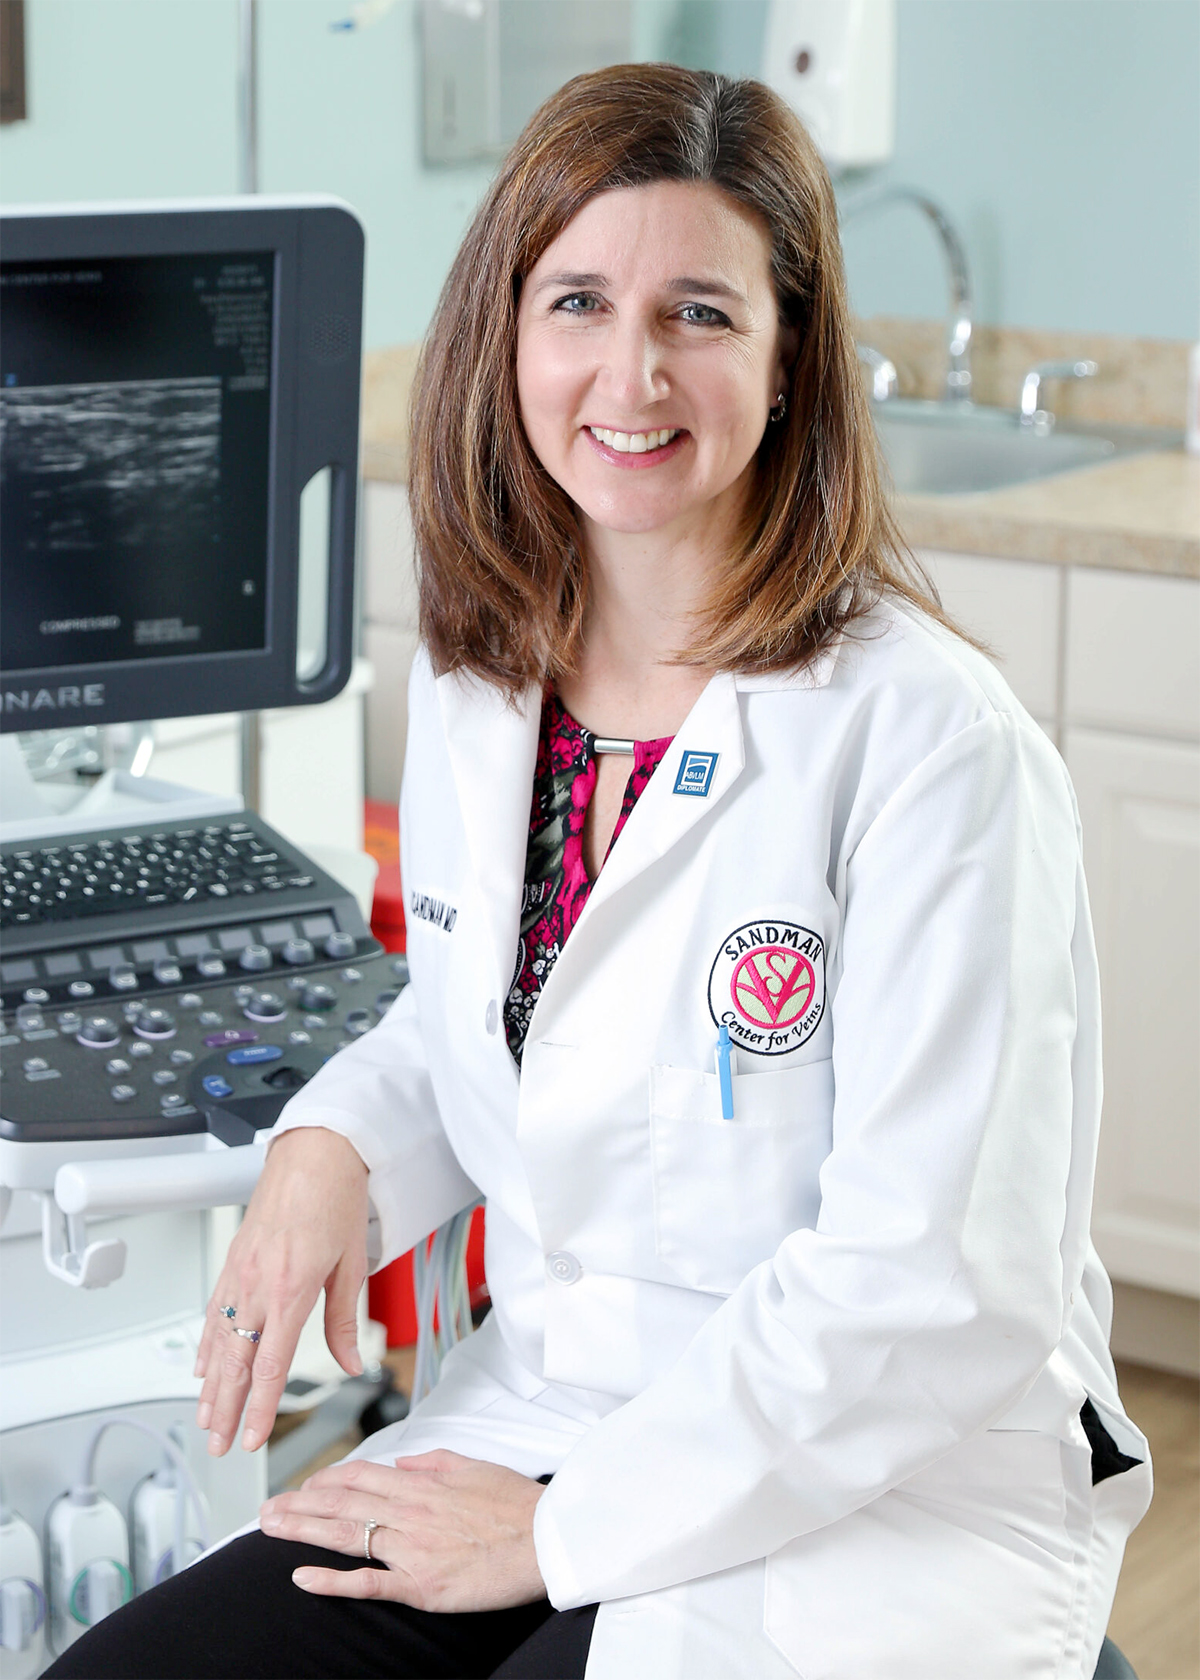 Dr Melissa Sandman, Sandman Center for Veins, Grand Rapids, Michigan